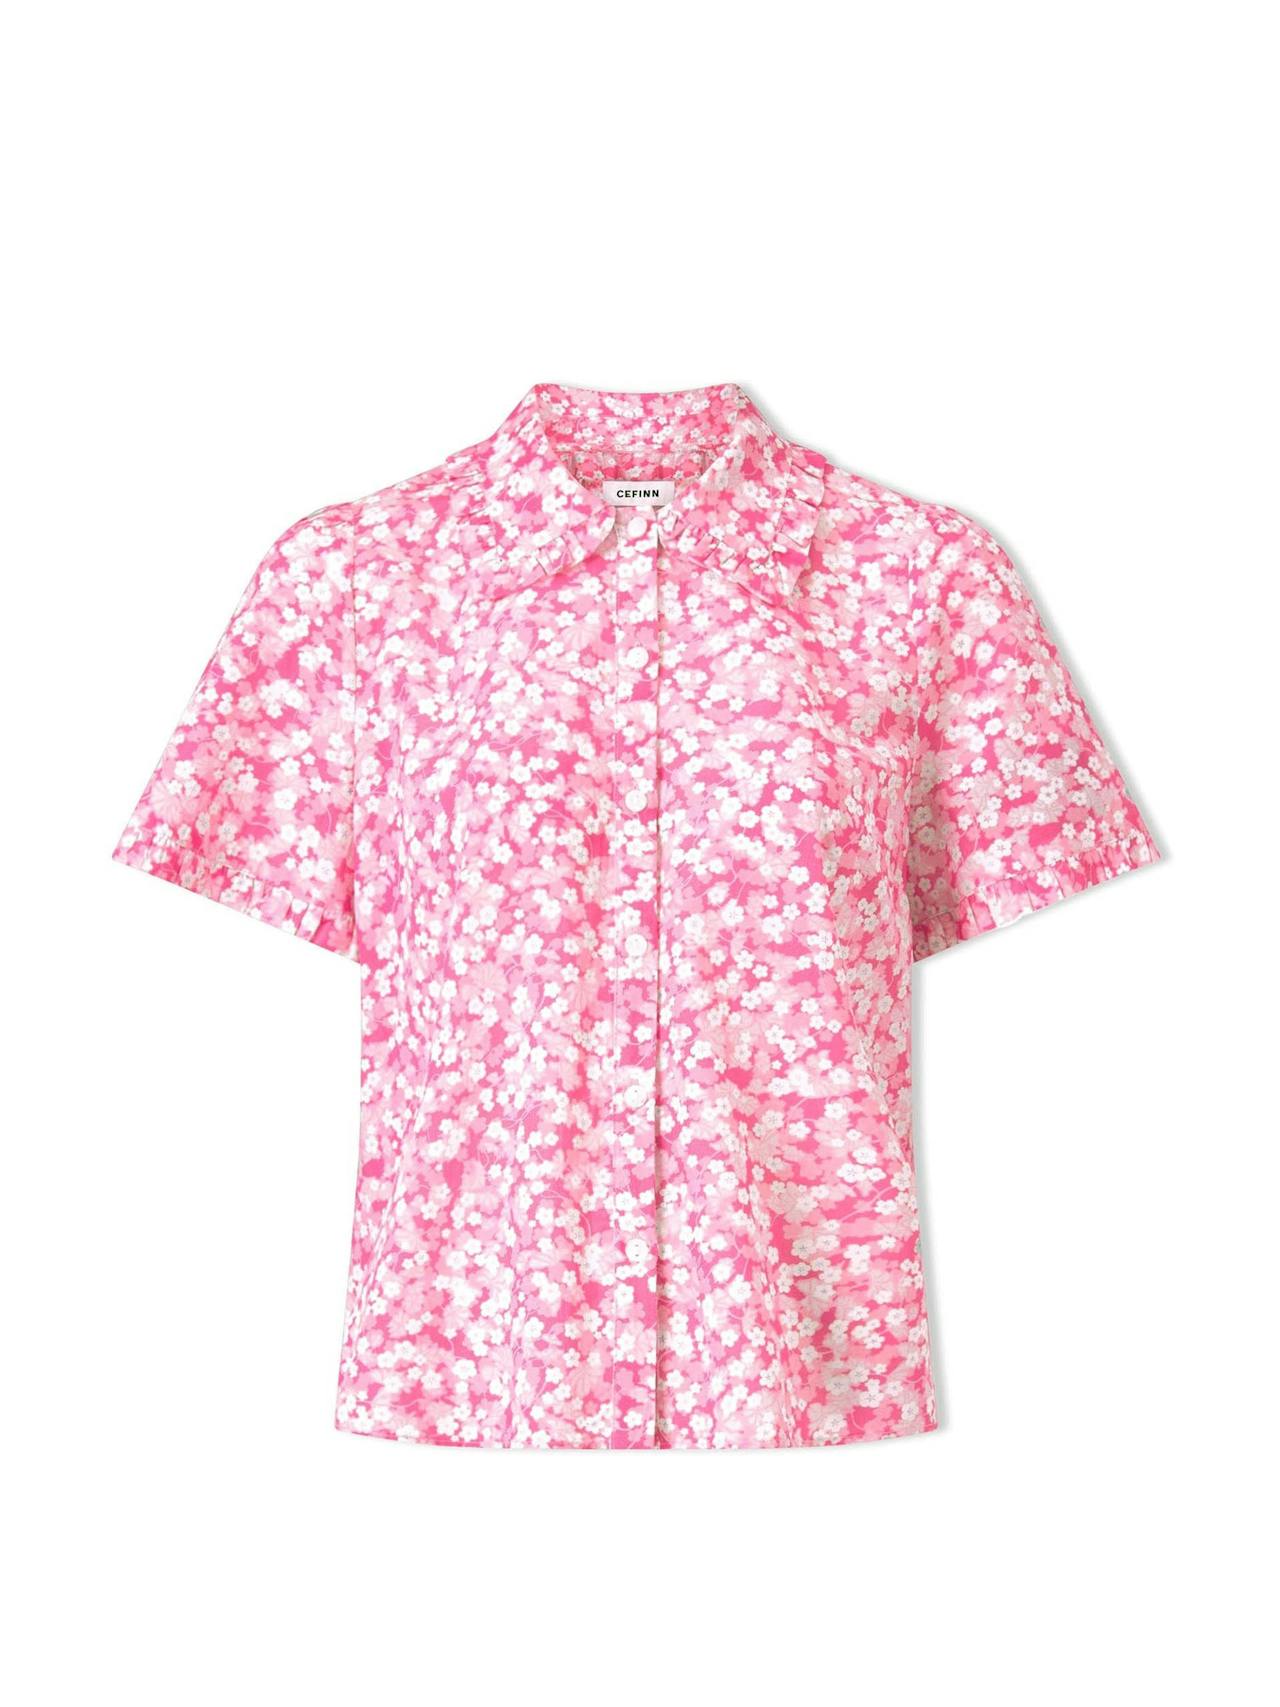 Hot pink blossom print Pippi cotton blend blouse